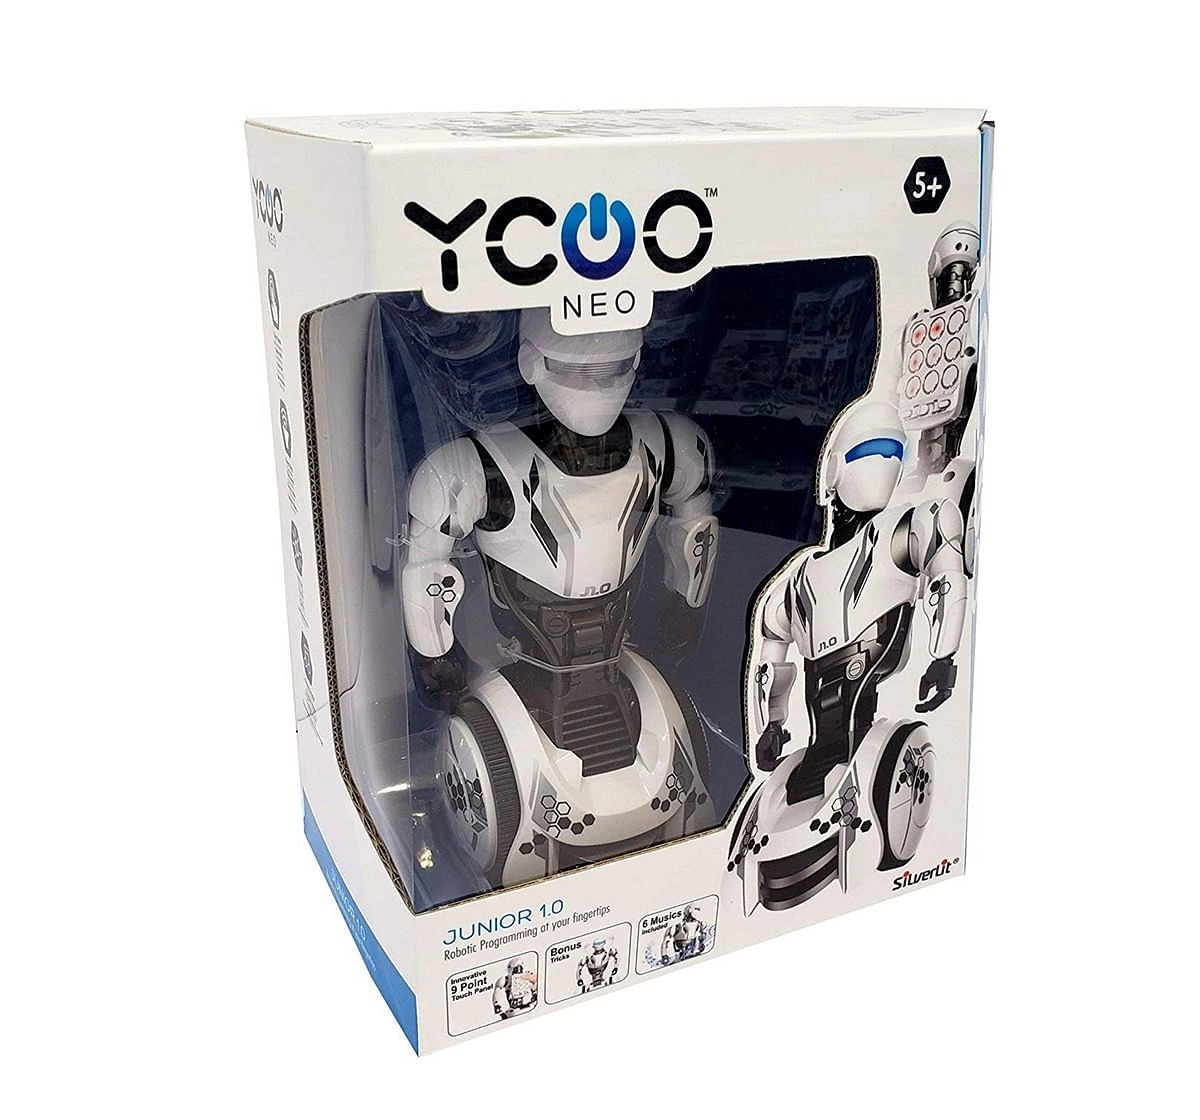 Silverlit Ycoo Junior 1.0 Robot-White Robotics for Kids age 5Y+ (White)